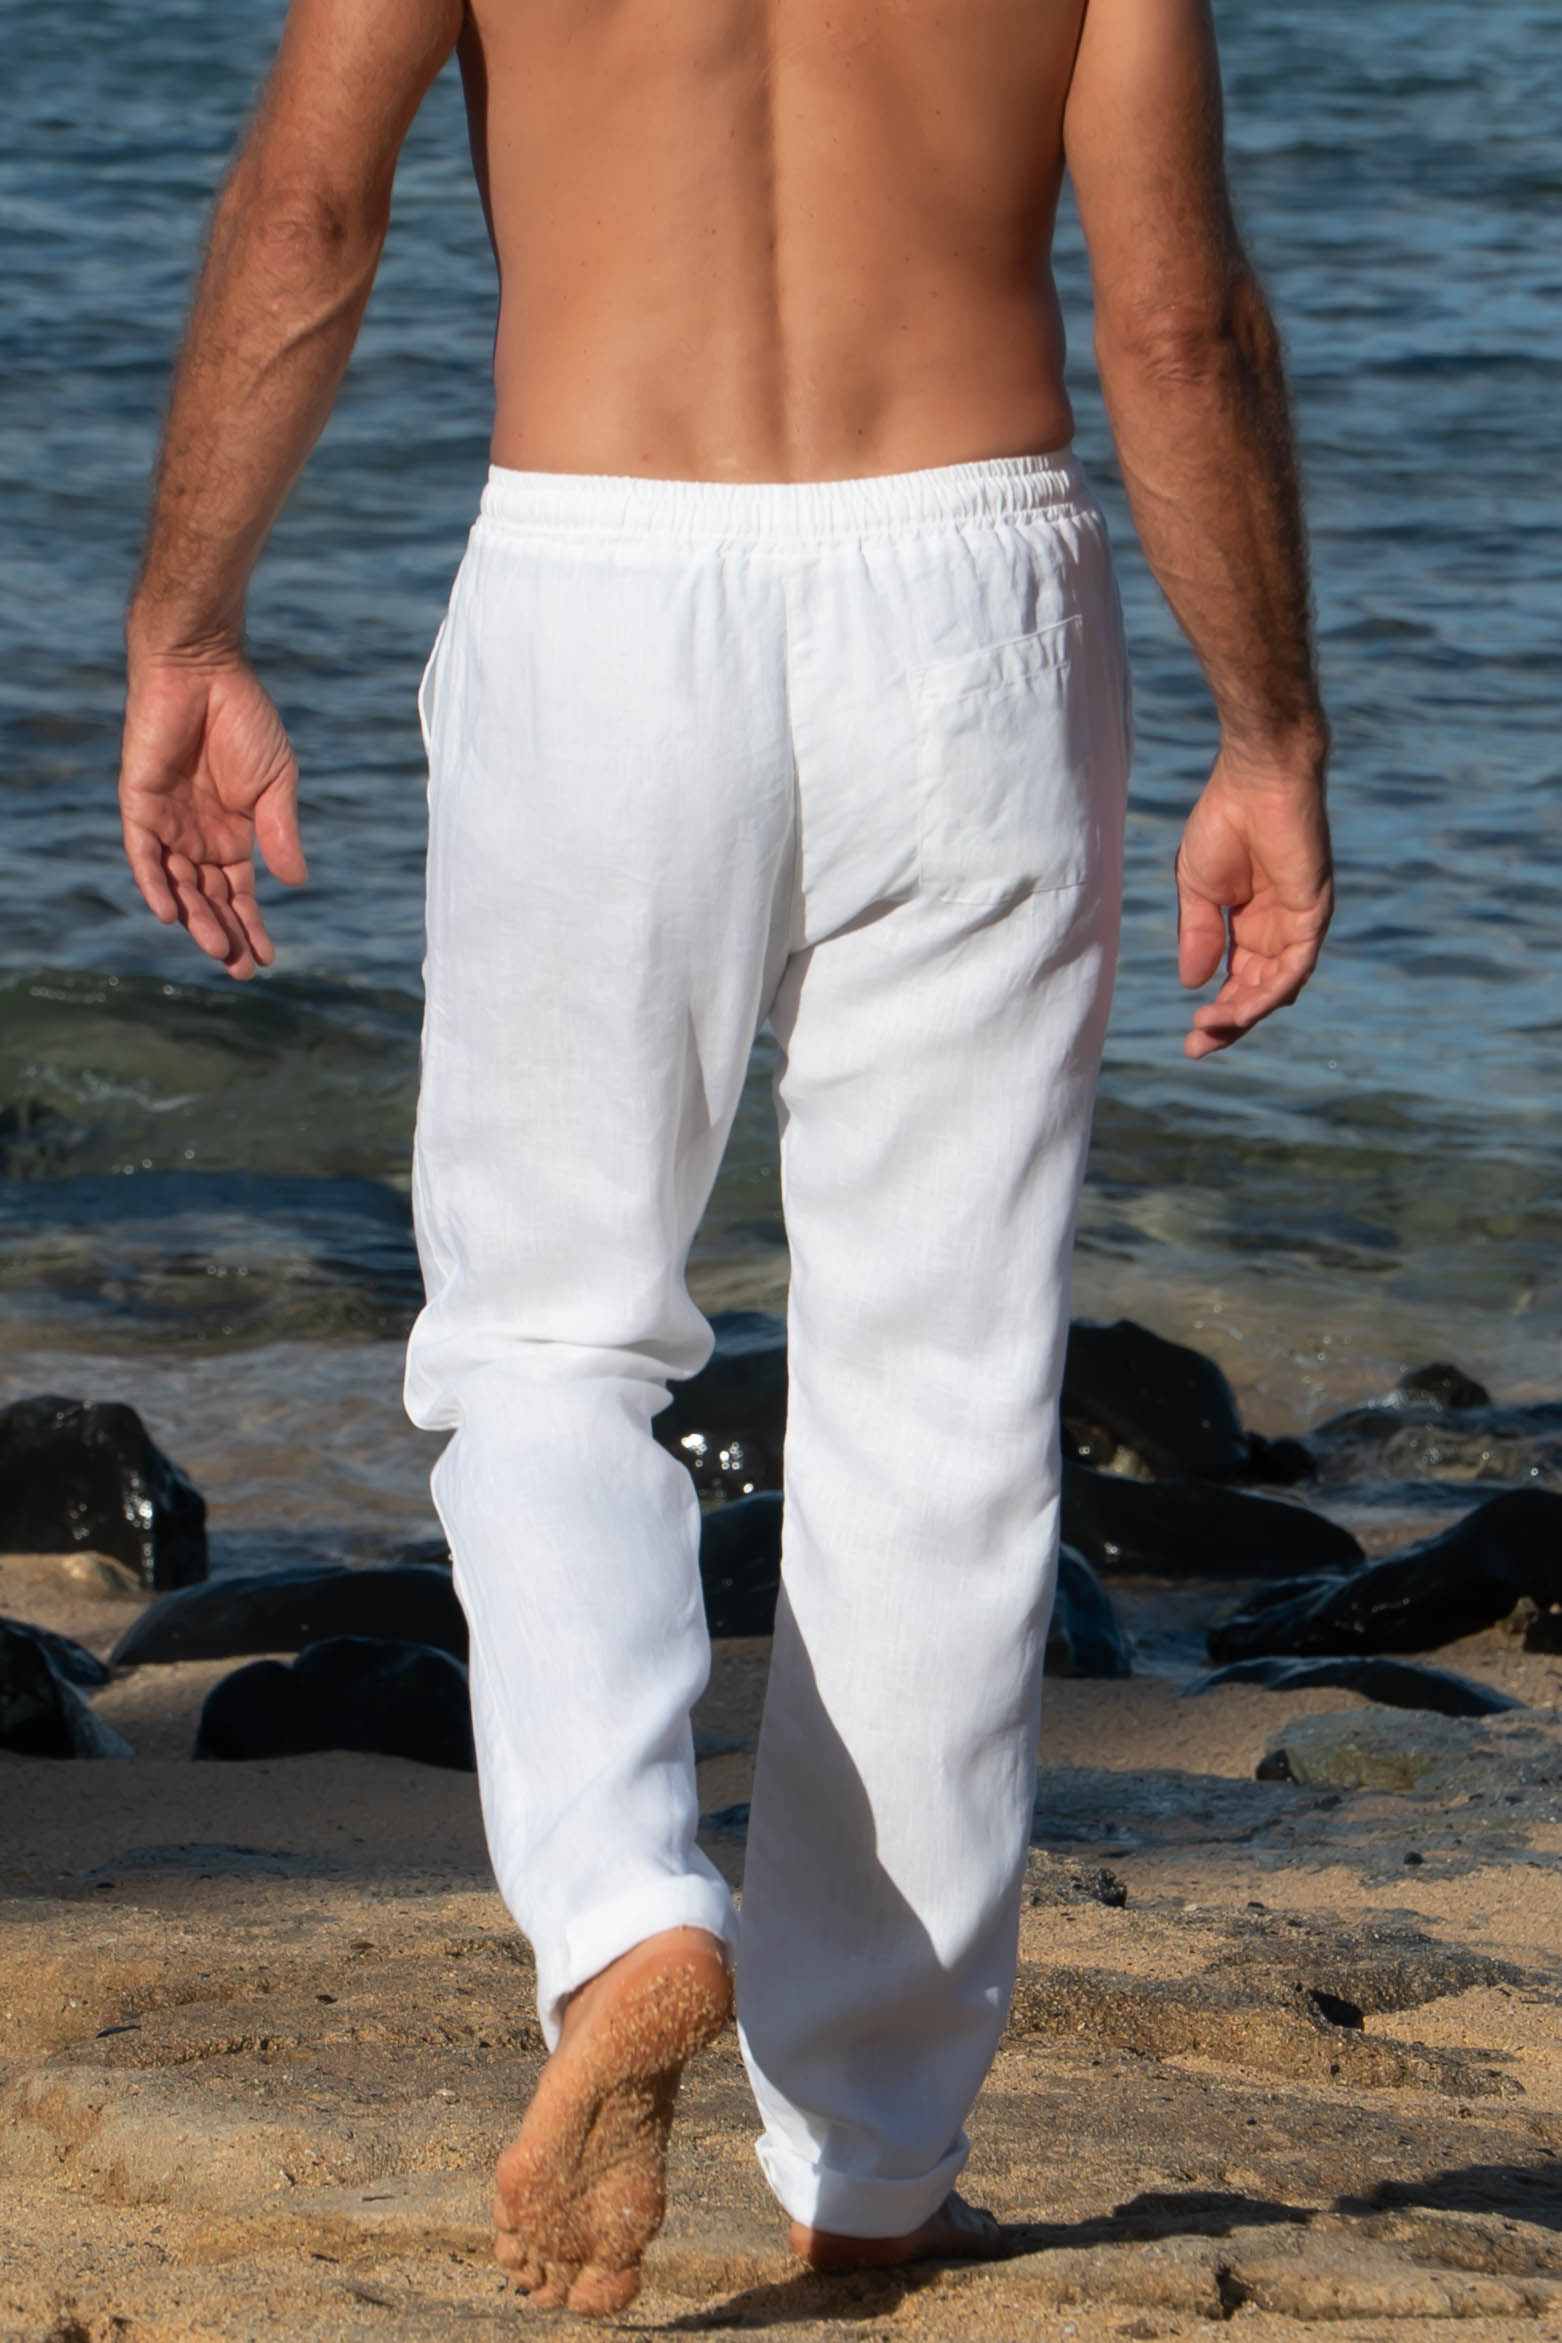 Bonnorth Men's Linen Loose Drawstring Elastic Waist Wide Leg Solid Casual  Pants Khaki X-Large